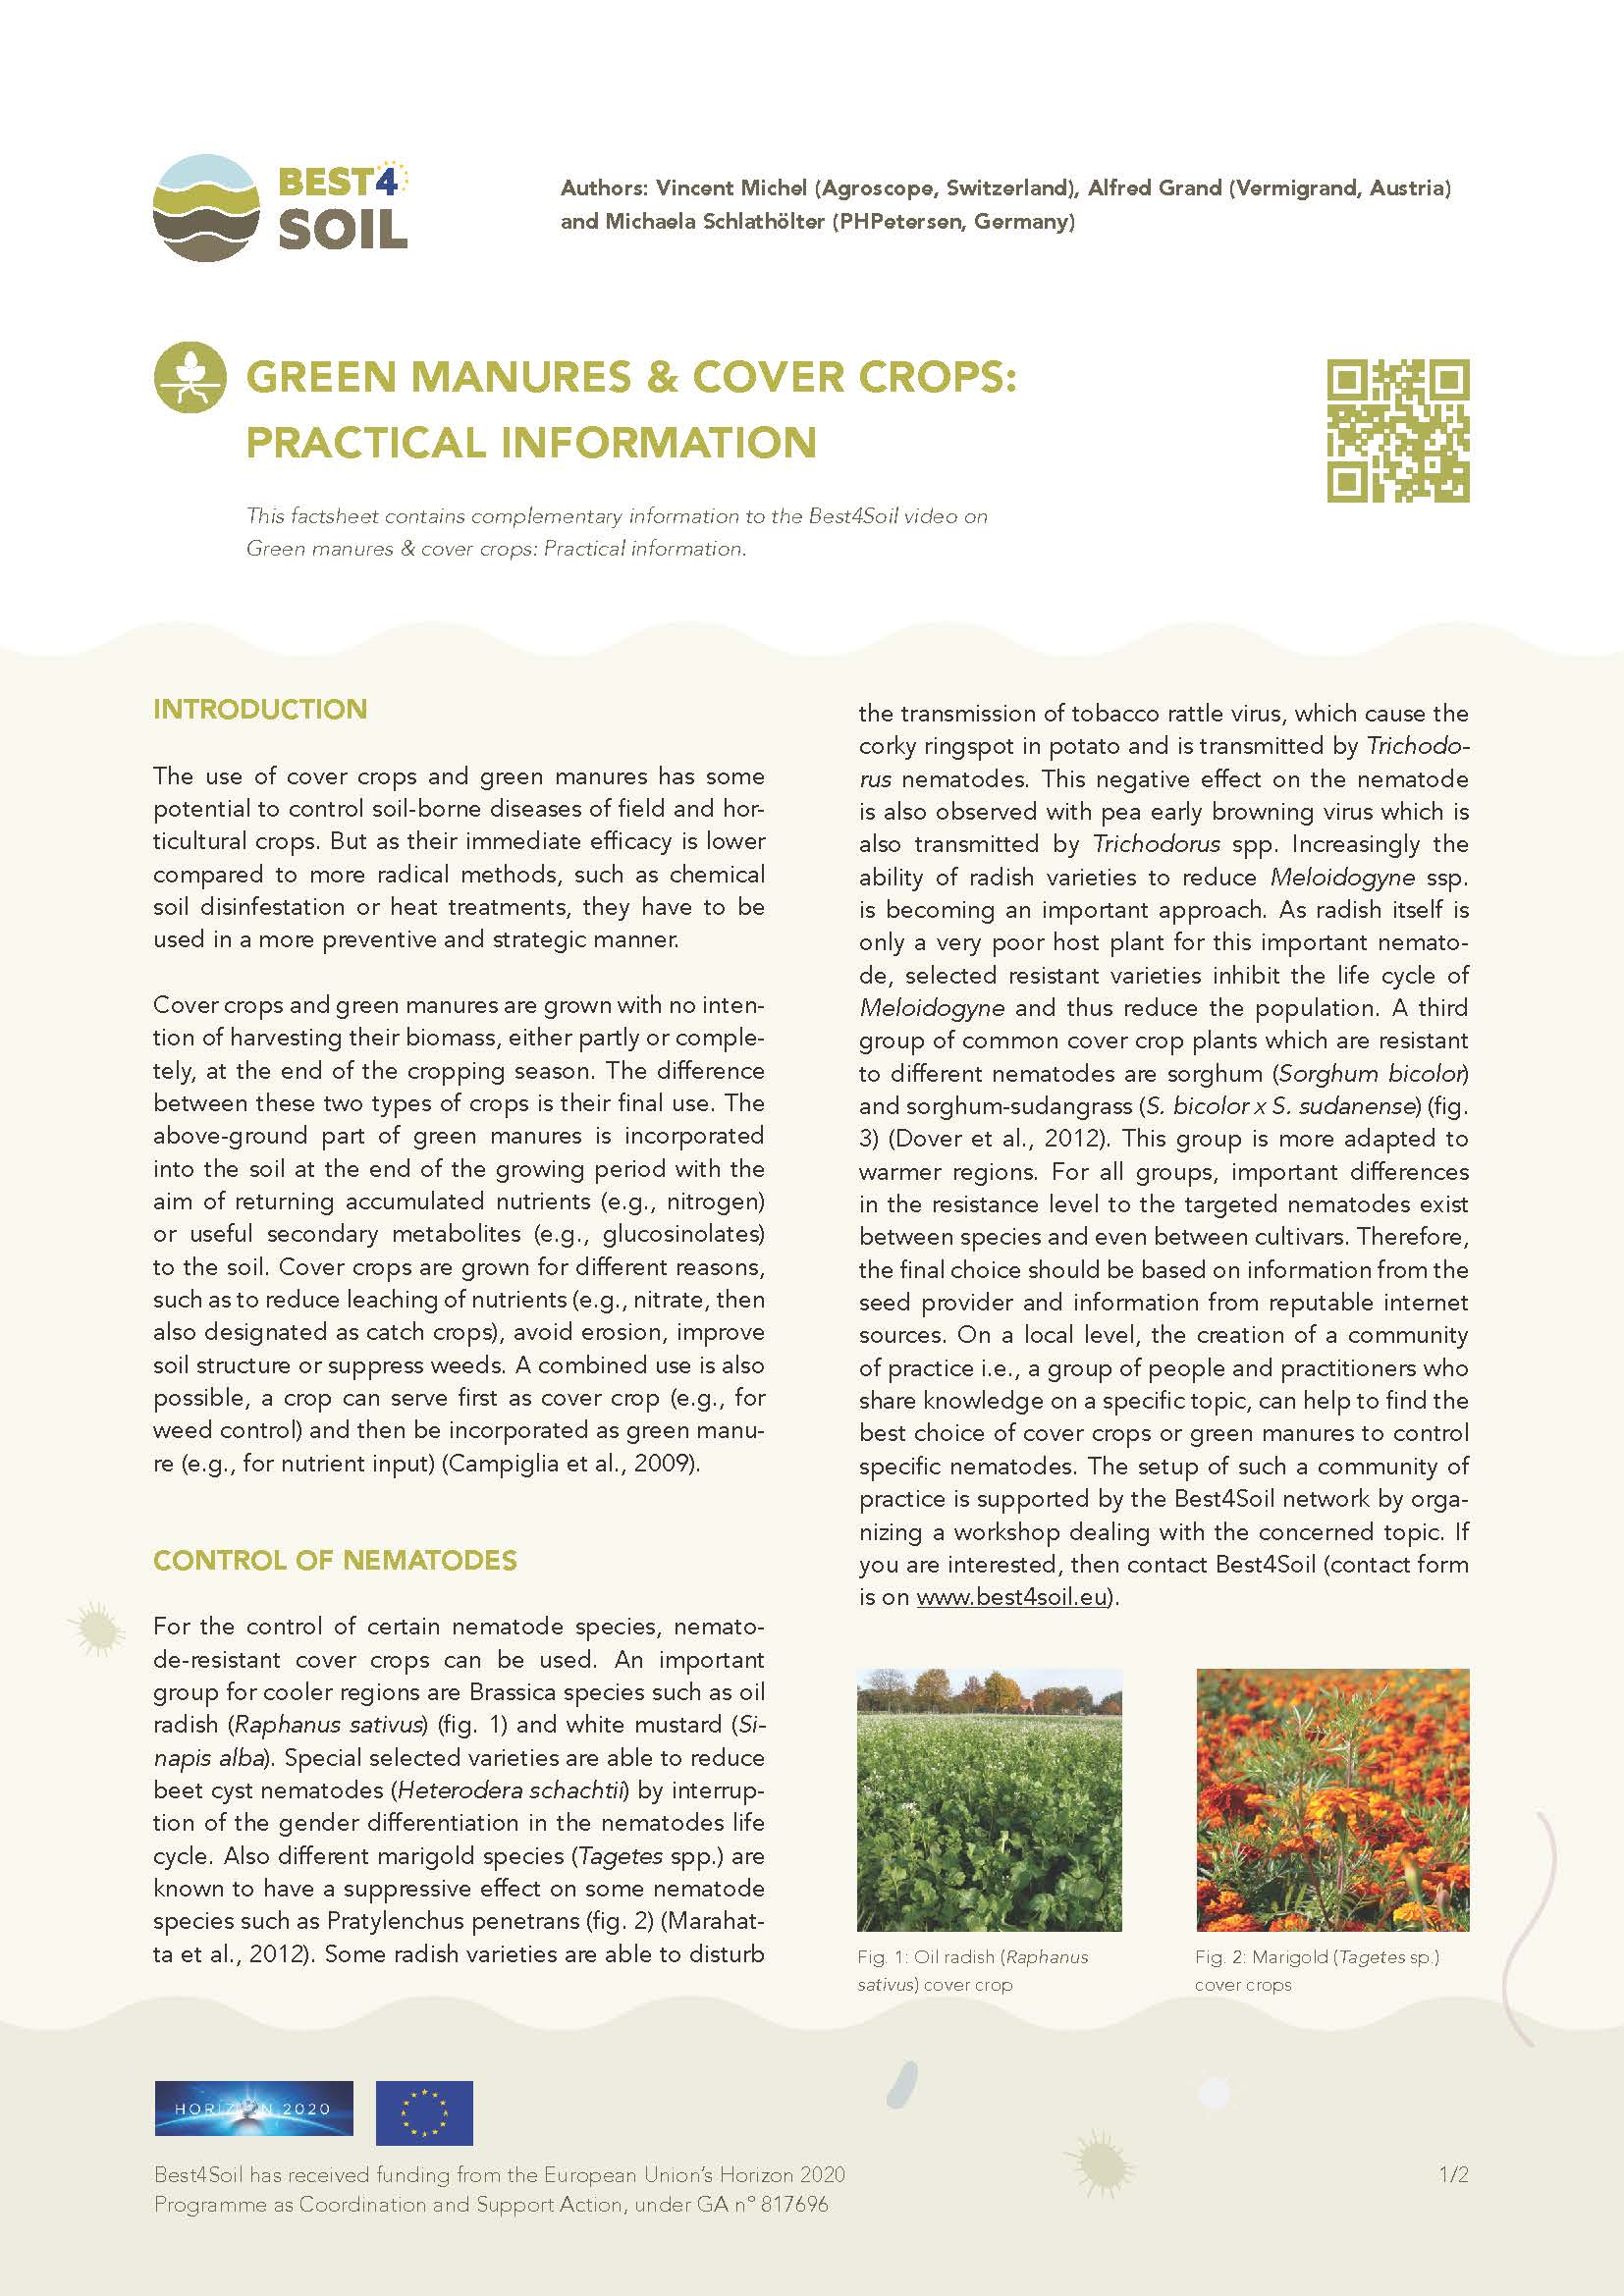 Concimi verdi e colture di copertura: informazioni pratiche (Scheda informativa Best4Soil)